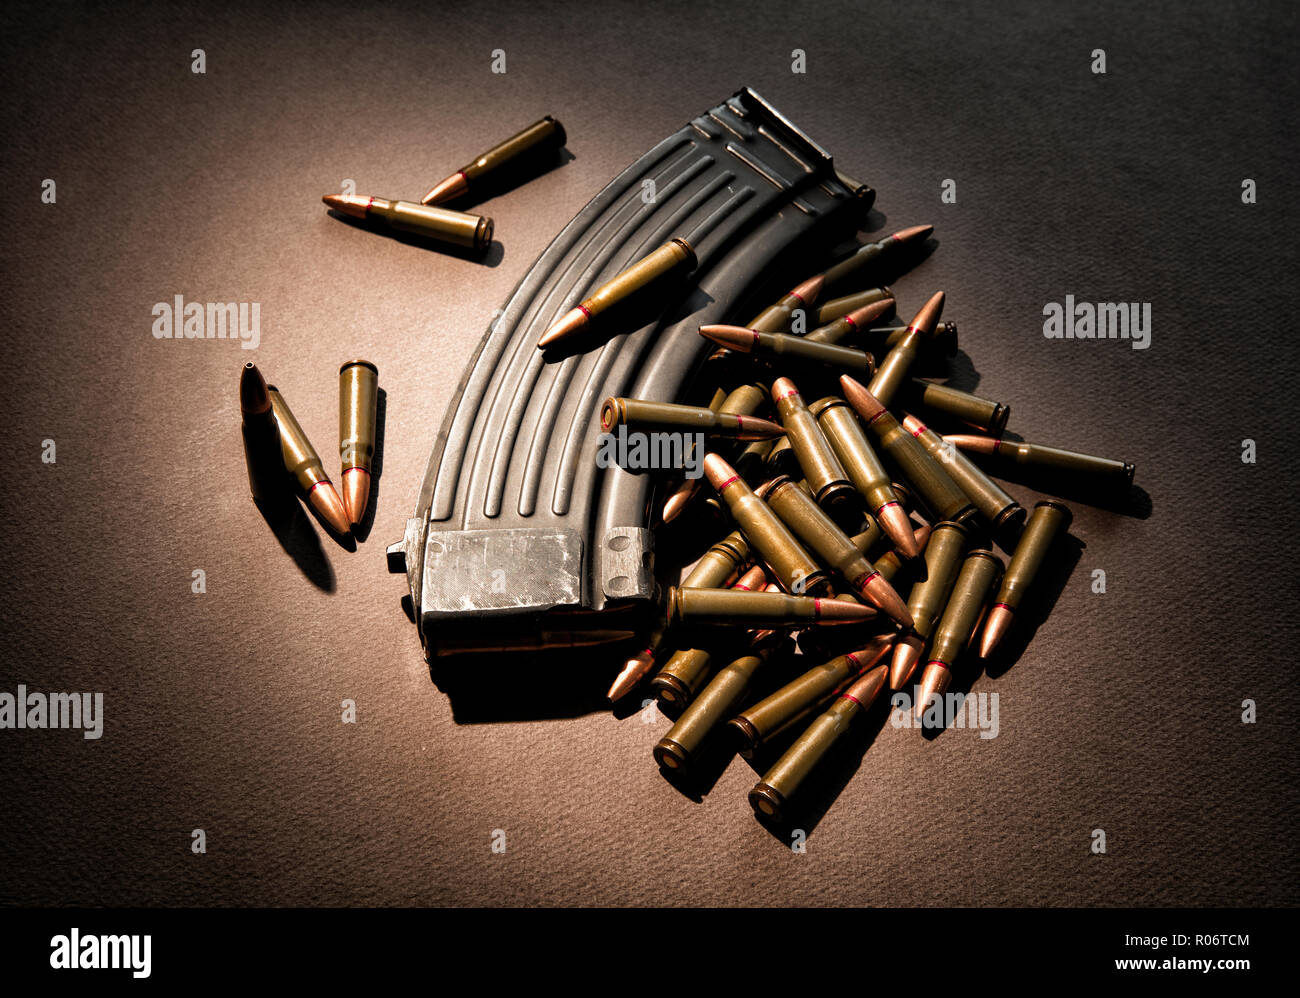 Hohe Kapazität 30 Runden Munition Magazin mit scharfer Munition. Stockfoto